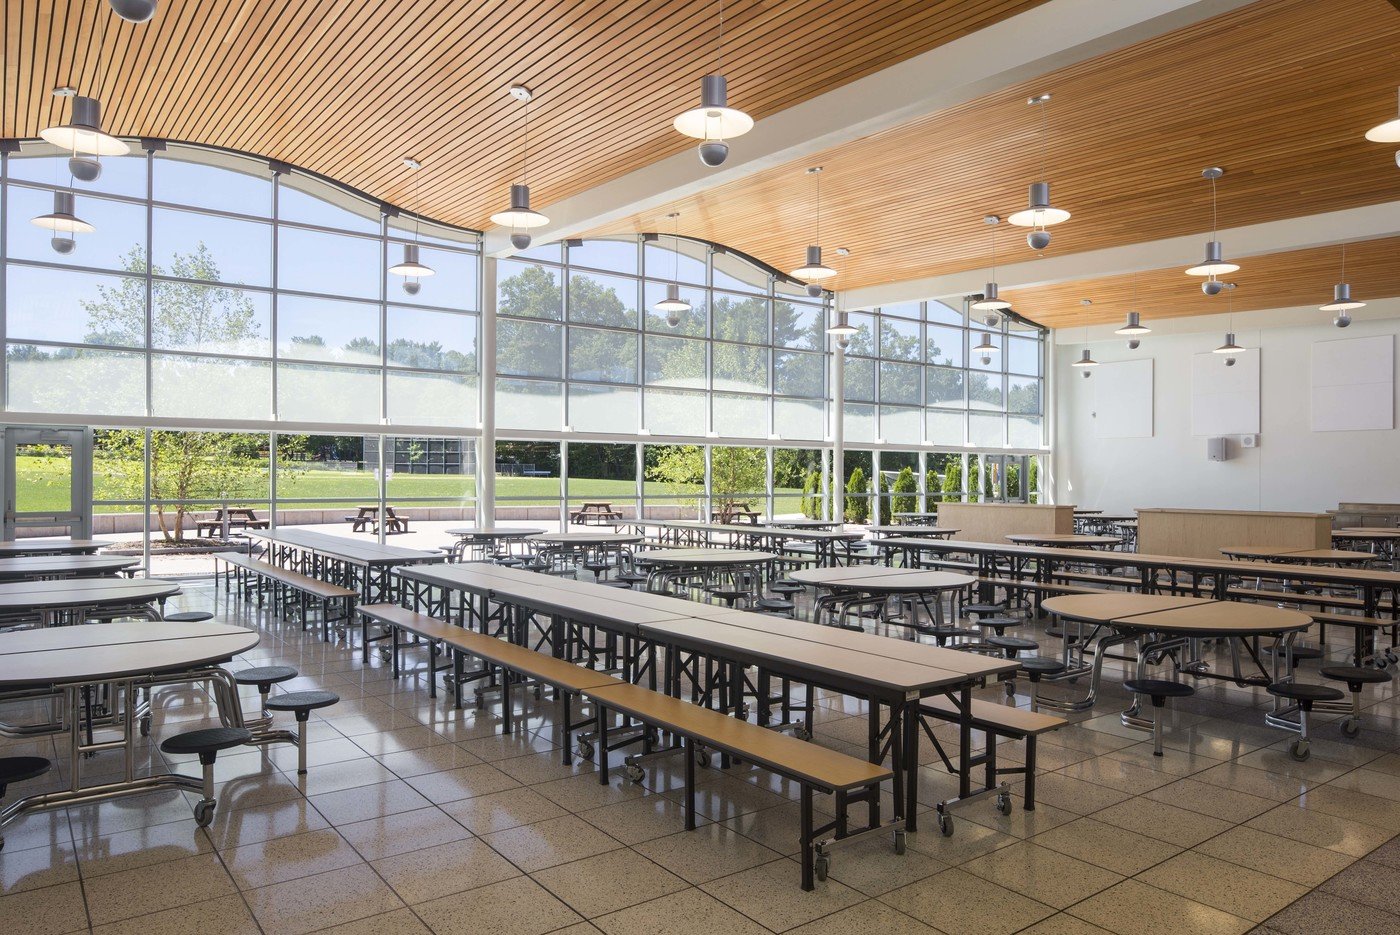 5 tskp bristol greene hills elementary school interior cafeteria 1400 xxx q85